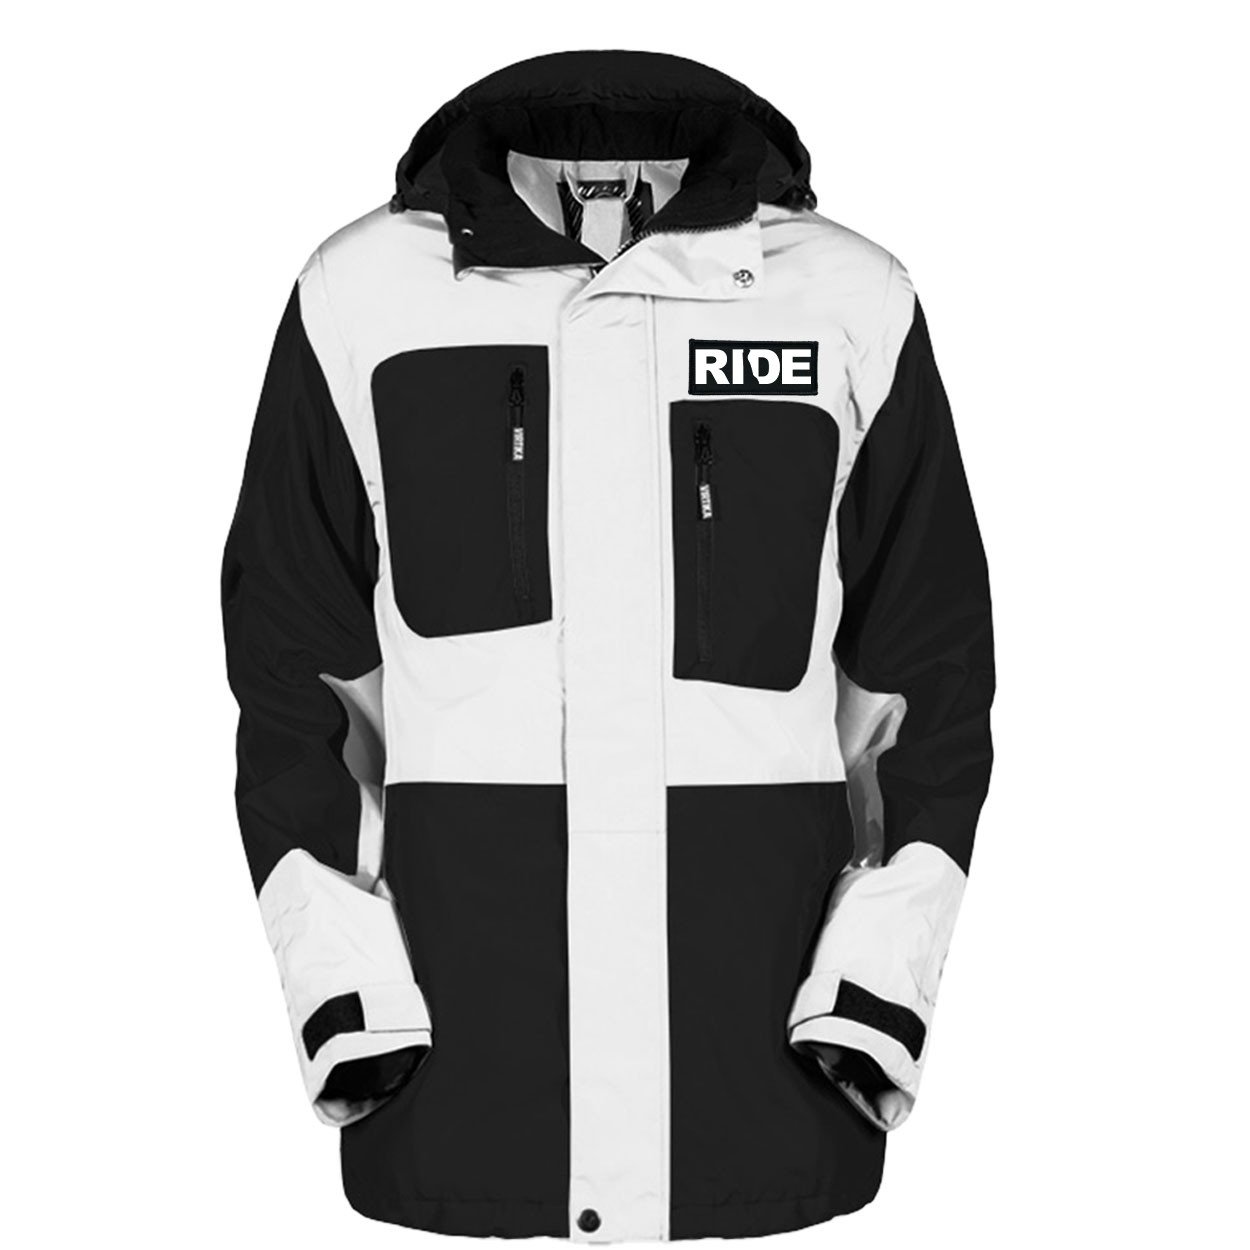 Ride Delaware Pro Waterproof Breathable Winter Virtika Jacket Black/White (White Logo)